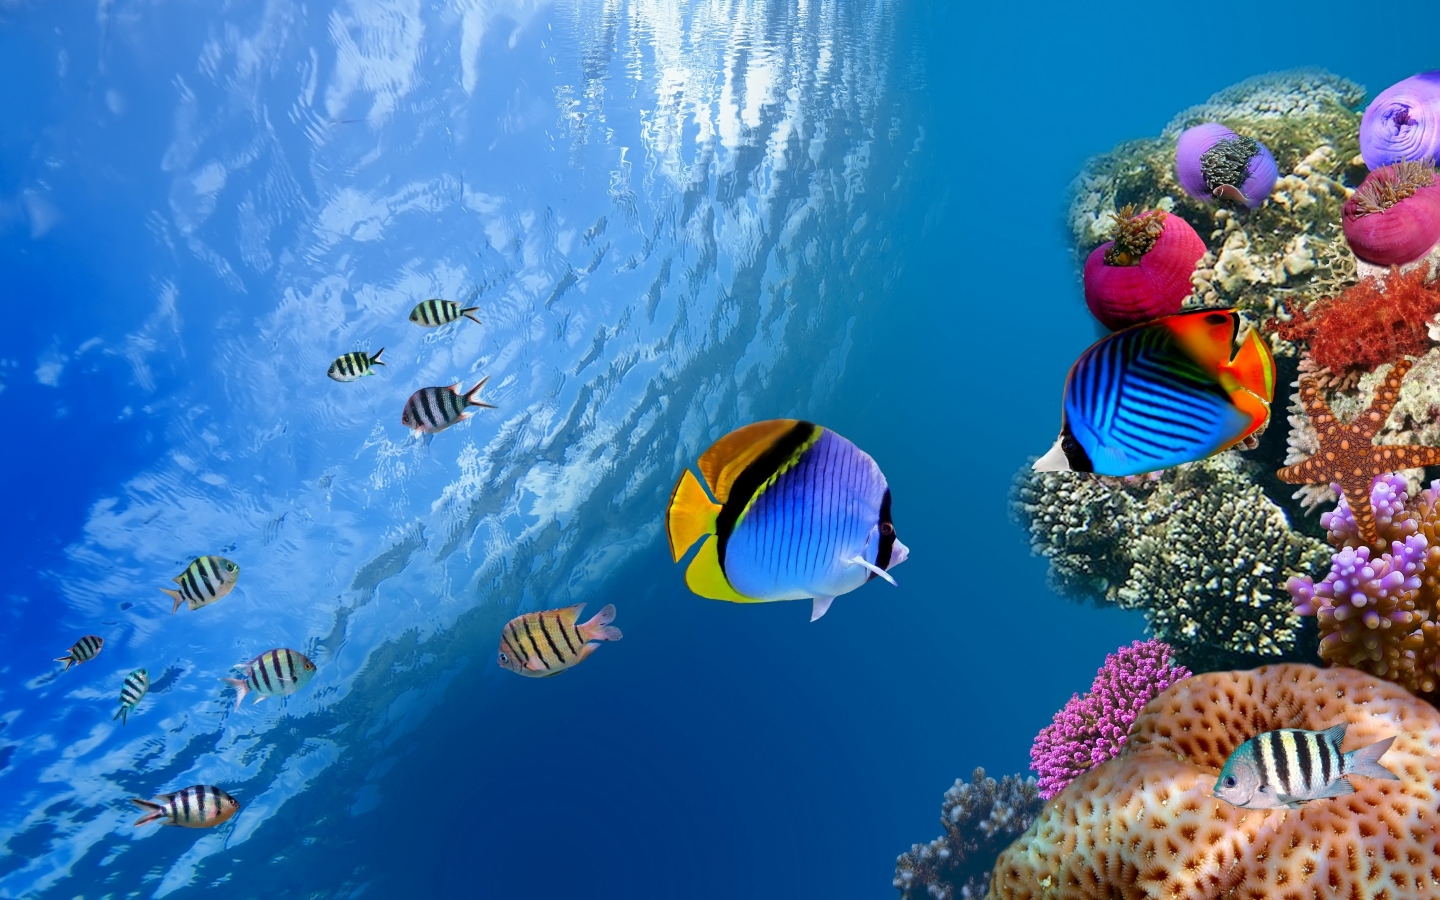 Underwater Coral Scene for 1440 x 900 widescreen resolution